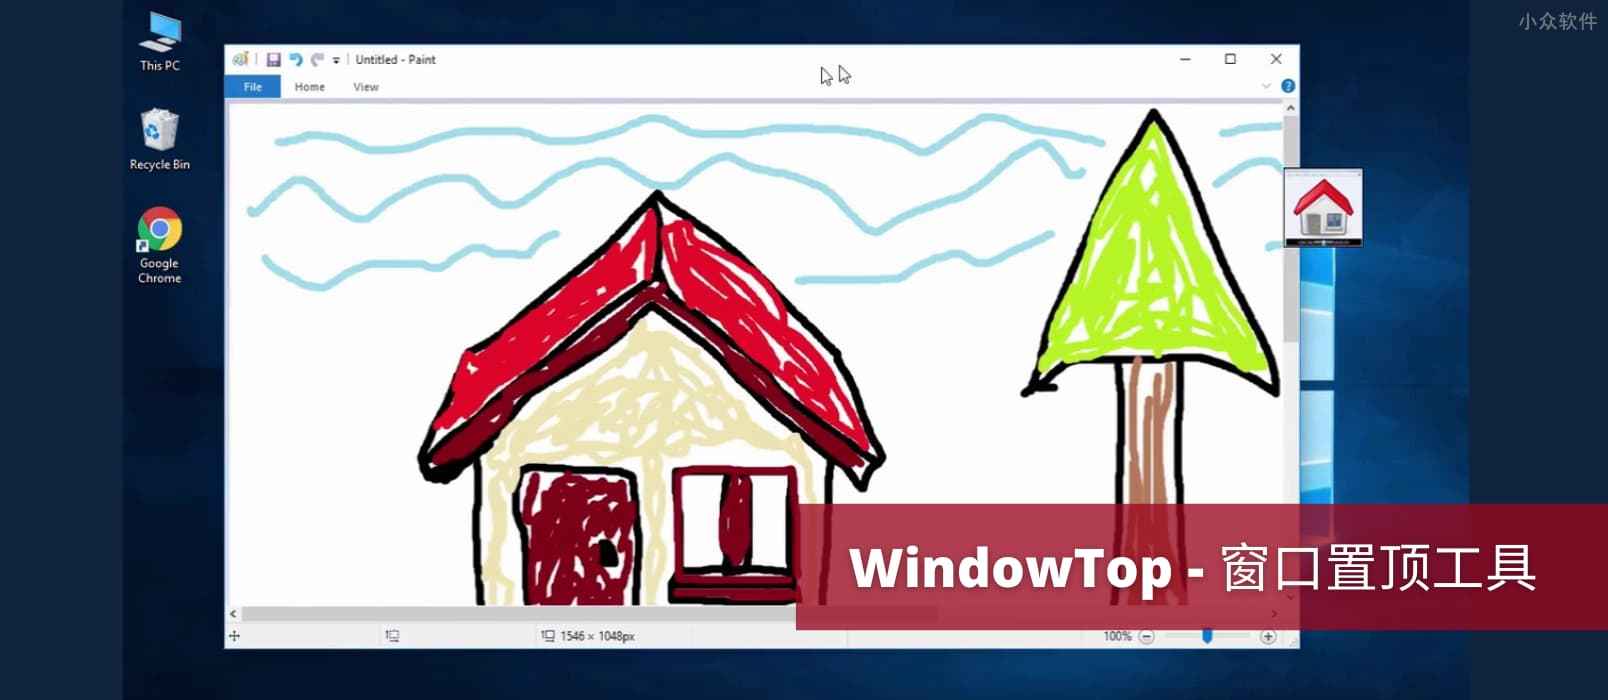 WindowTop - 窗口置顶工具：透明、鼠标穿透、画中画、深色模式、毛玻璃效果，功能有点强